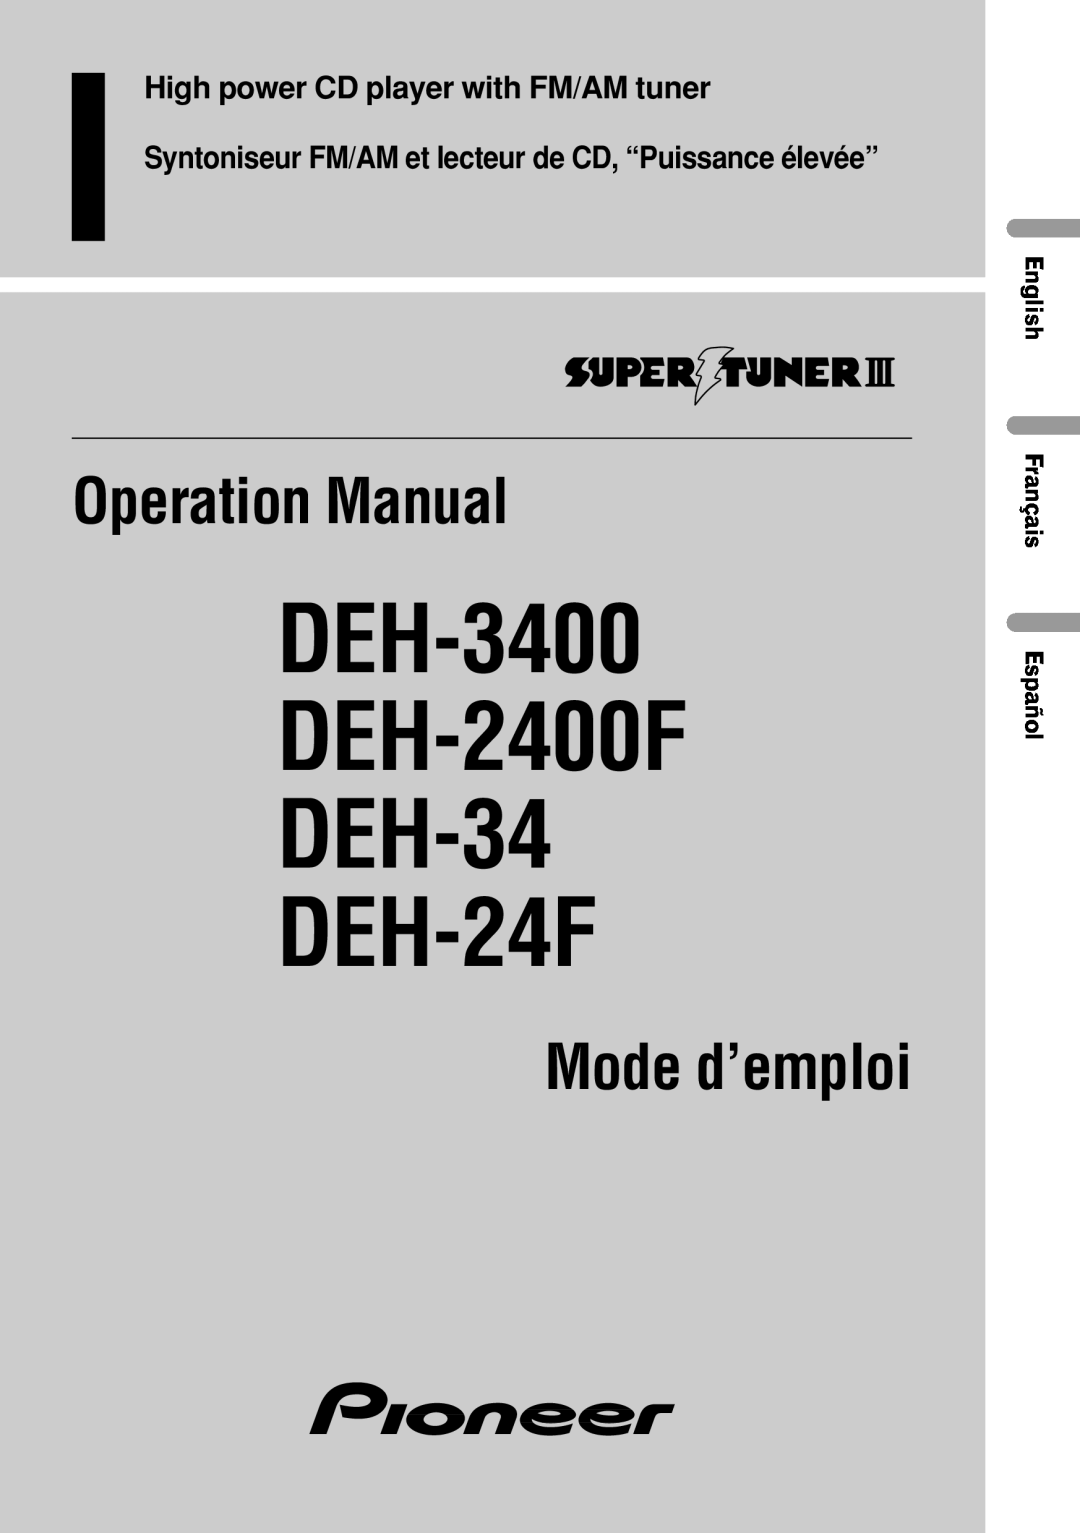 Pioneer operation manual English Français Español, DEH-3400 DEH-2400F DEH-34 DEH-24F, Mode d’emploi 